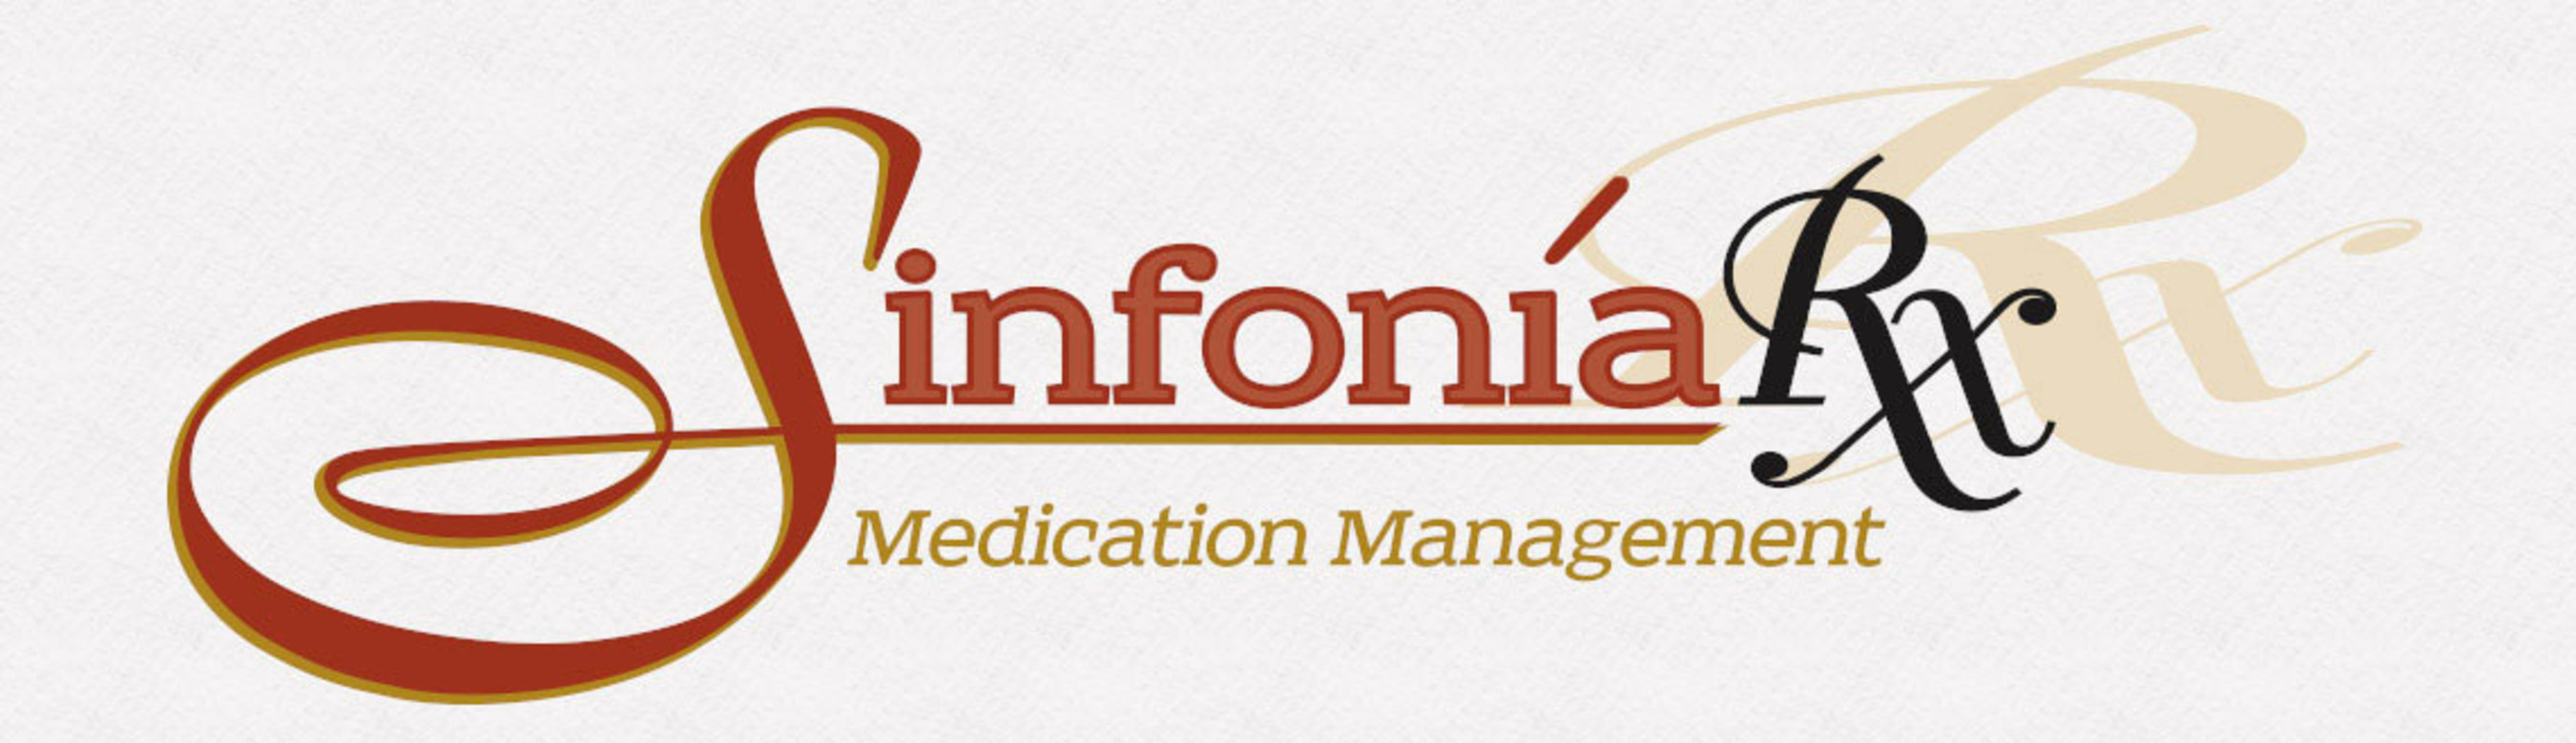 SinfoniaRx medical management company logo